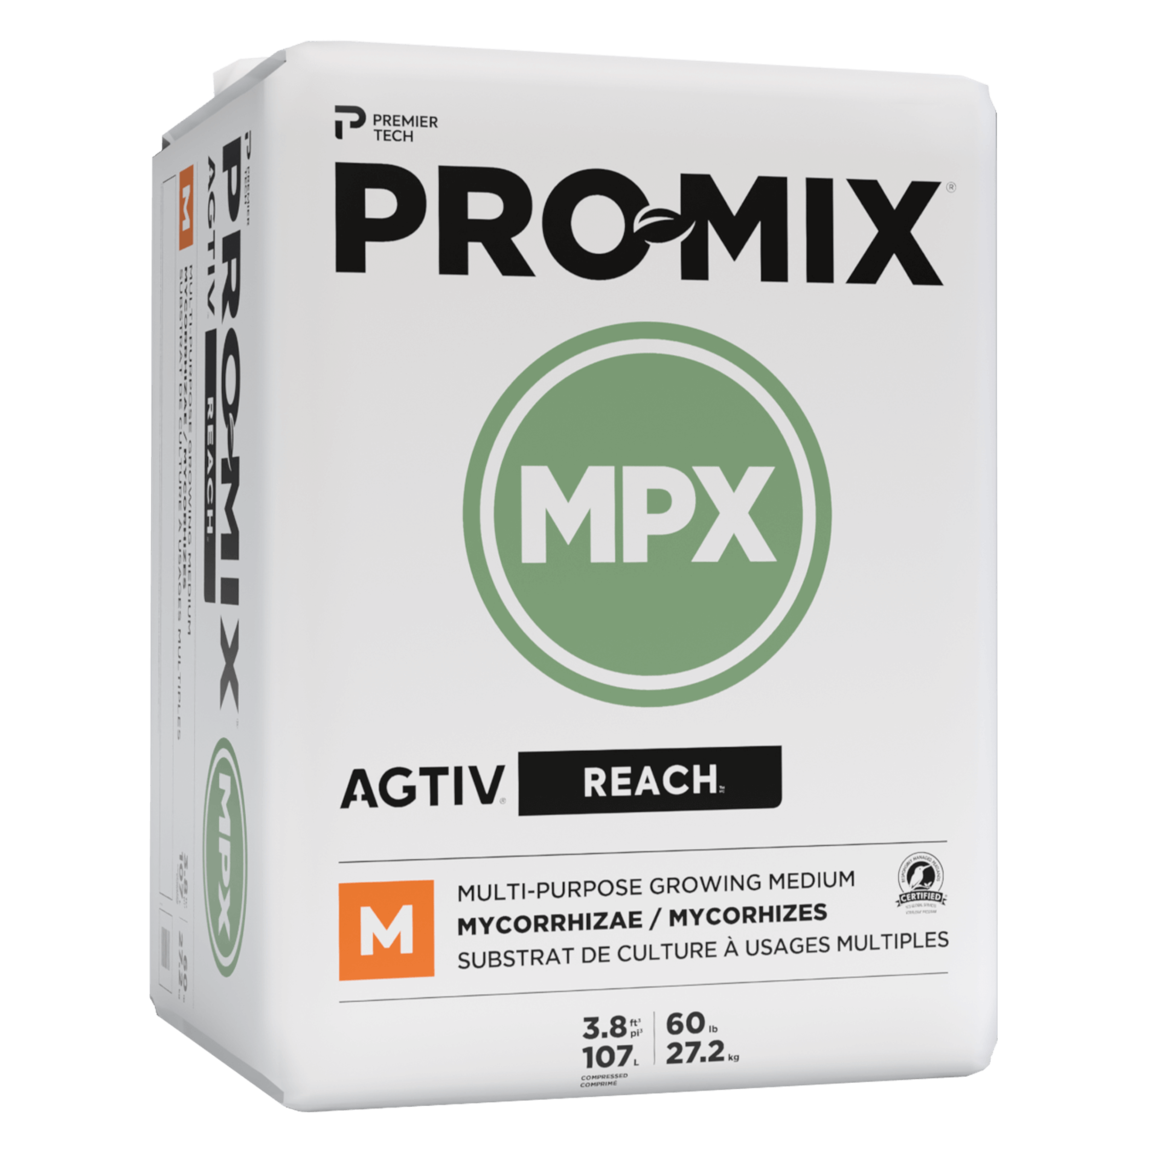 PRO-MIX MPX AGTIV REACH 3.8 cu.ft.